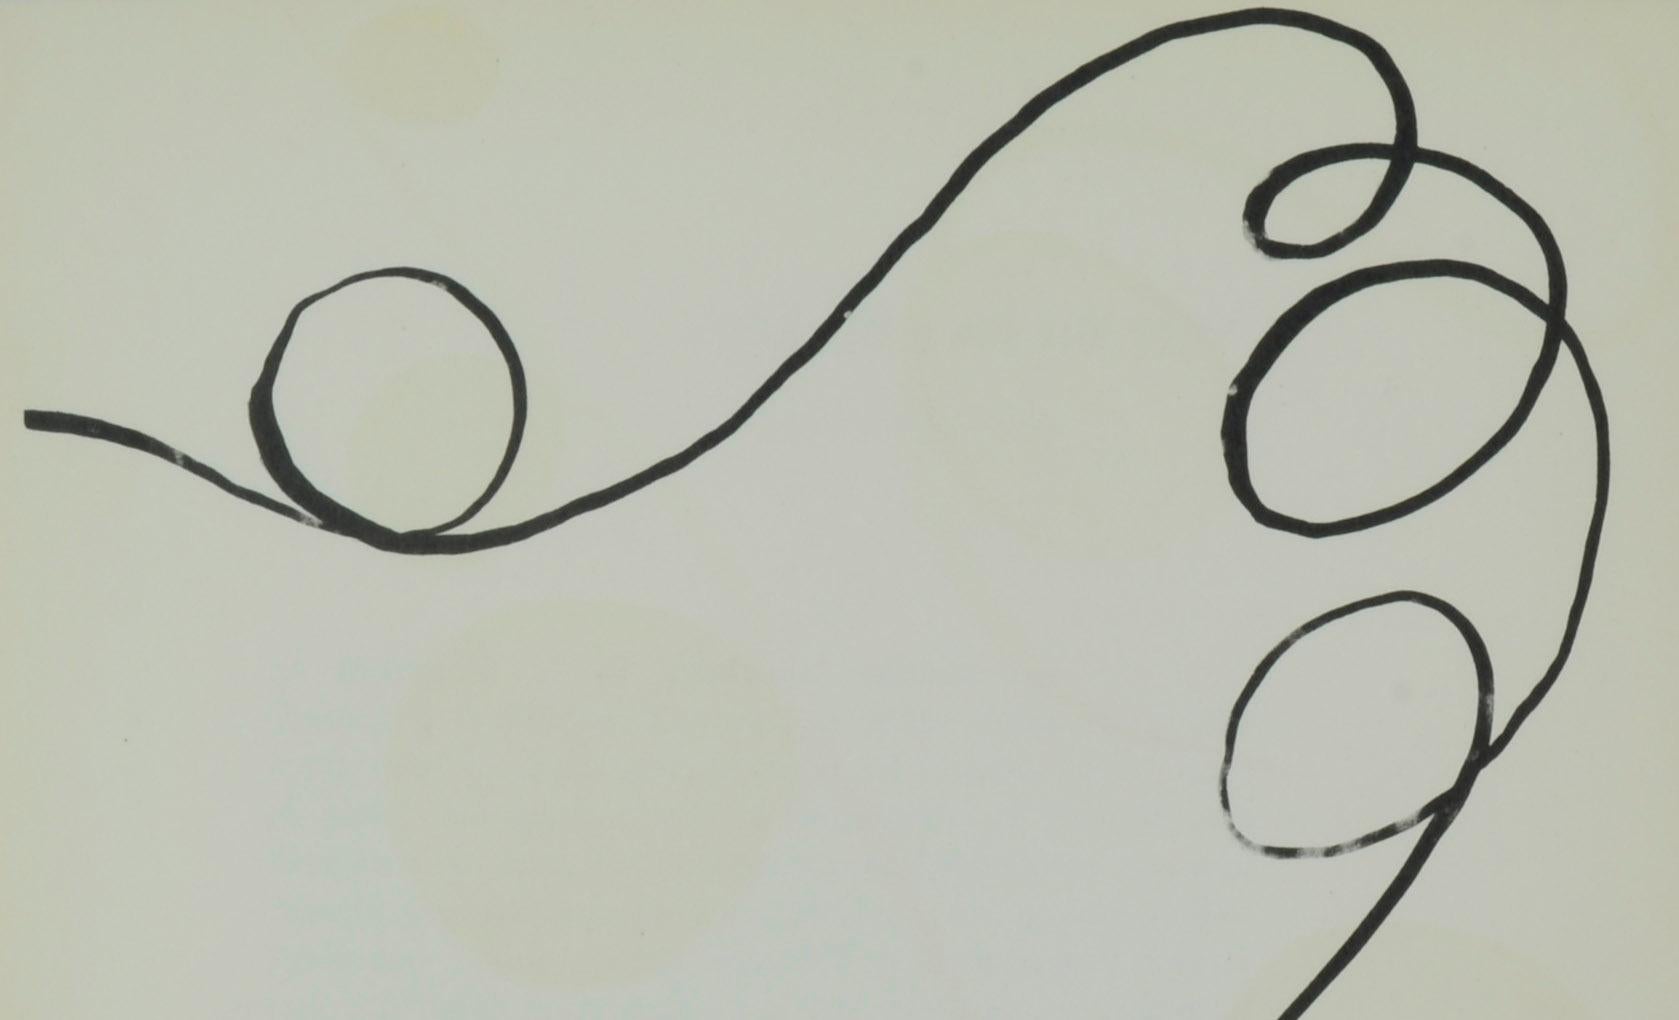 Untitled Double Page Illustration for DLM - Print by Alexander Calder